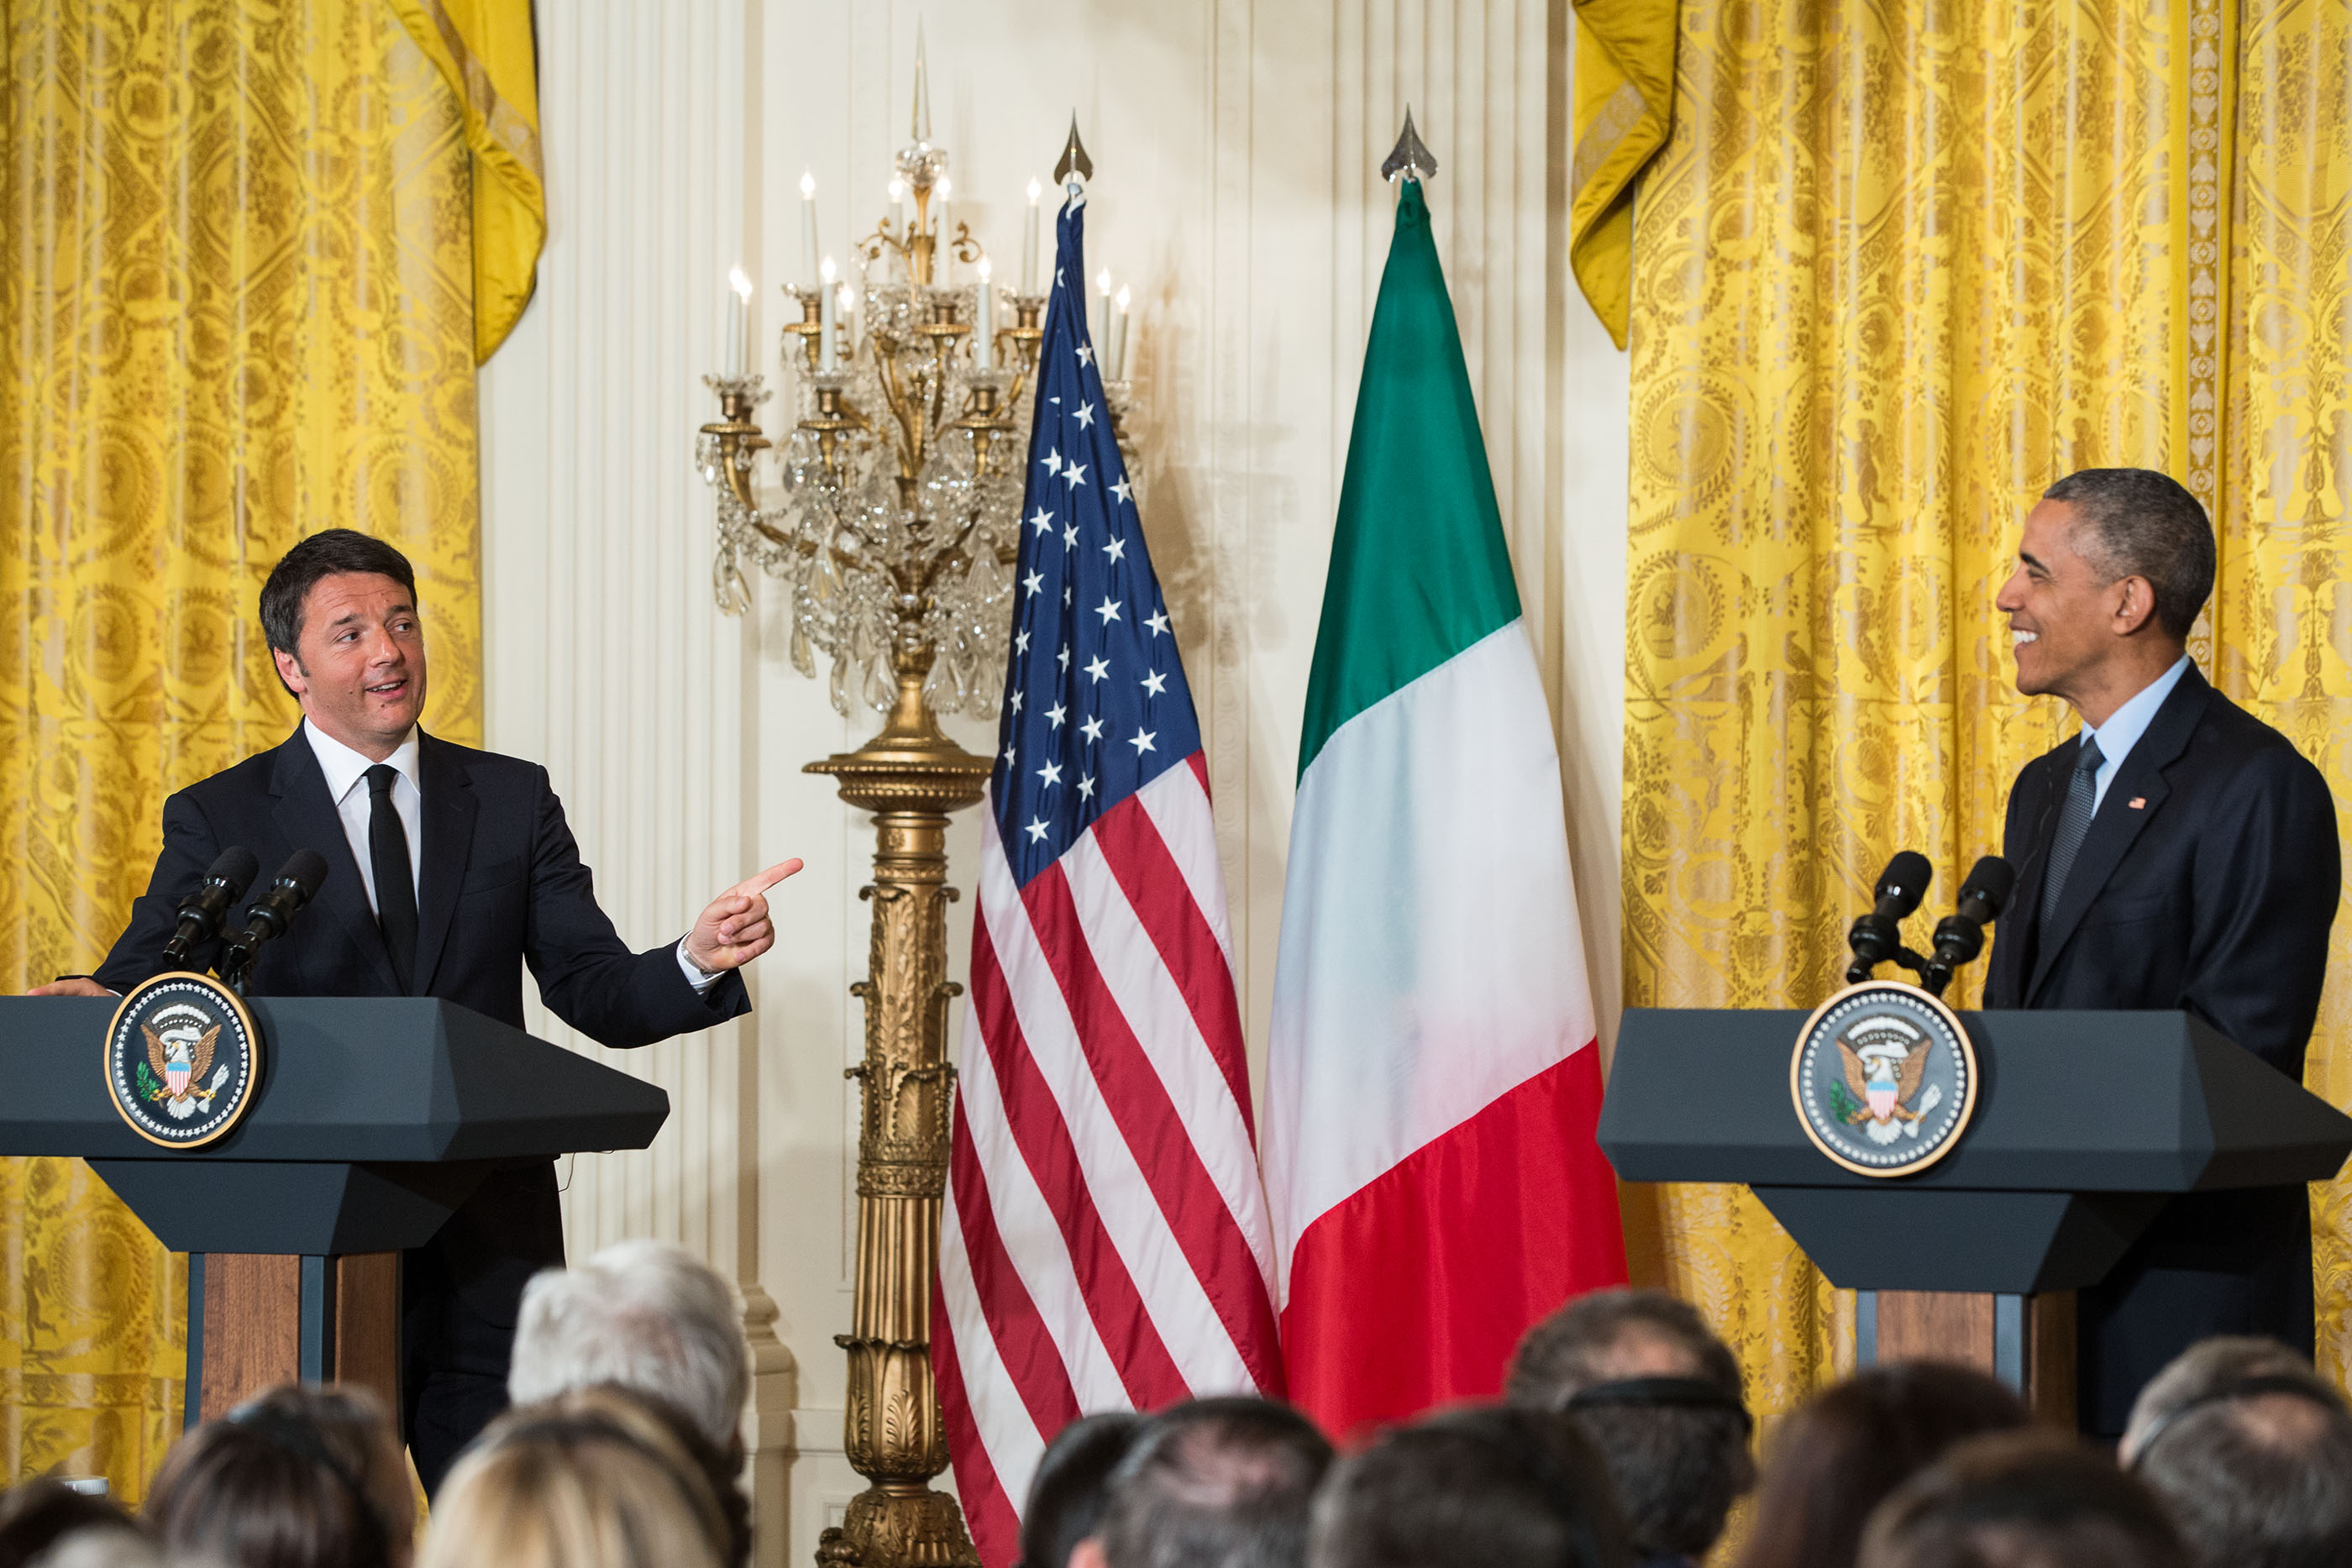 President Barack Obama and Prime Minister Matteo Renzi participate in a press conference